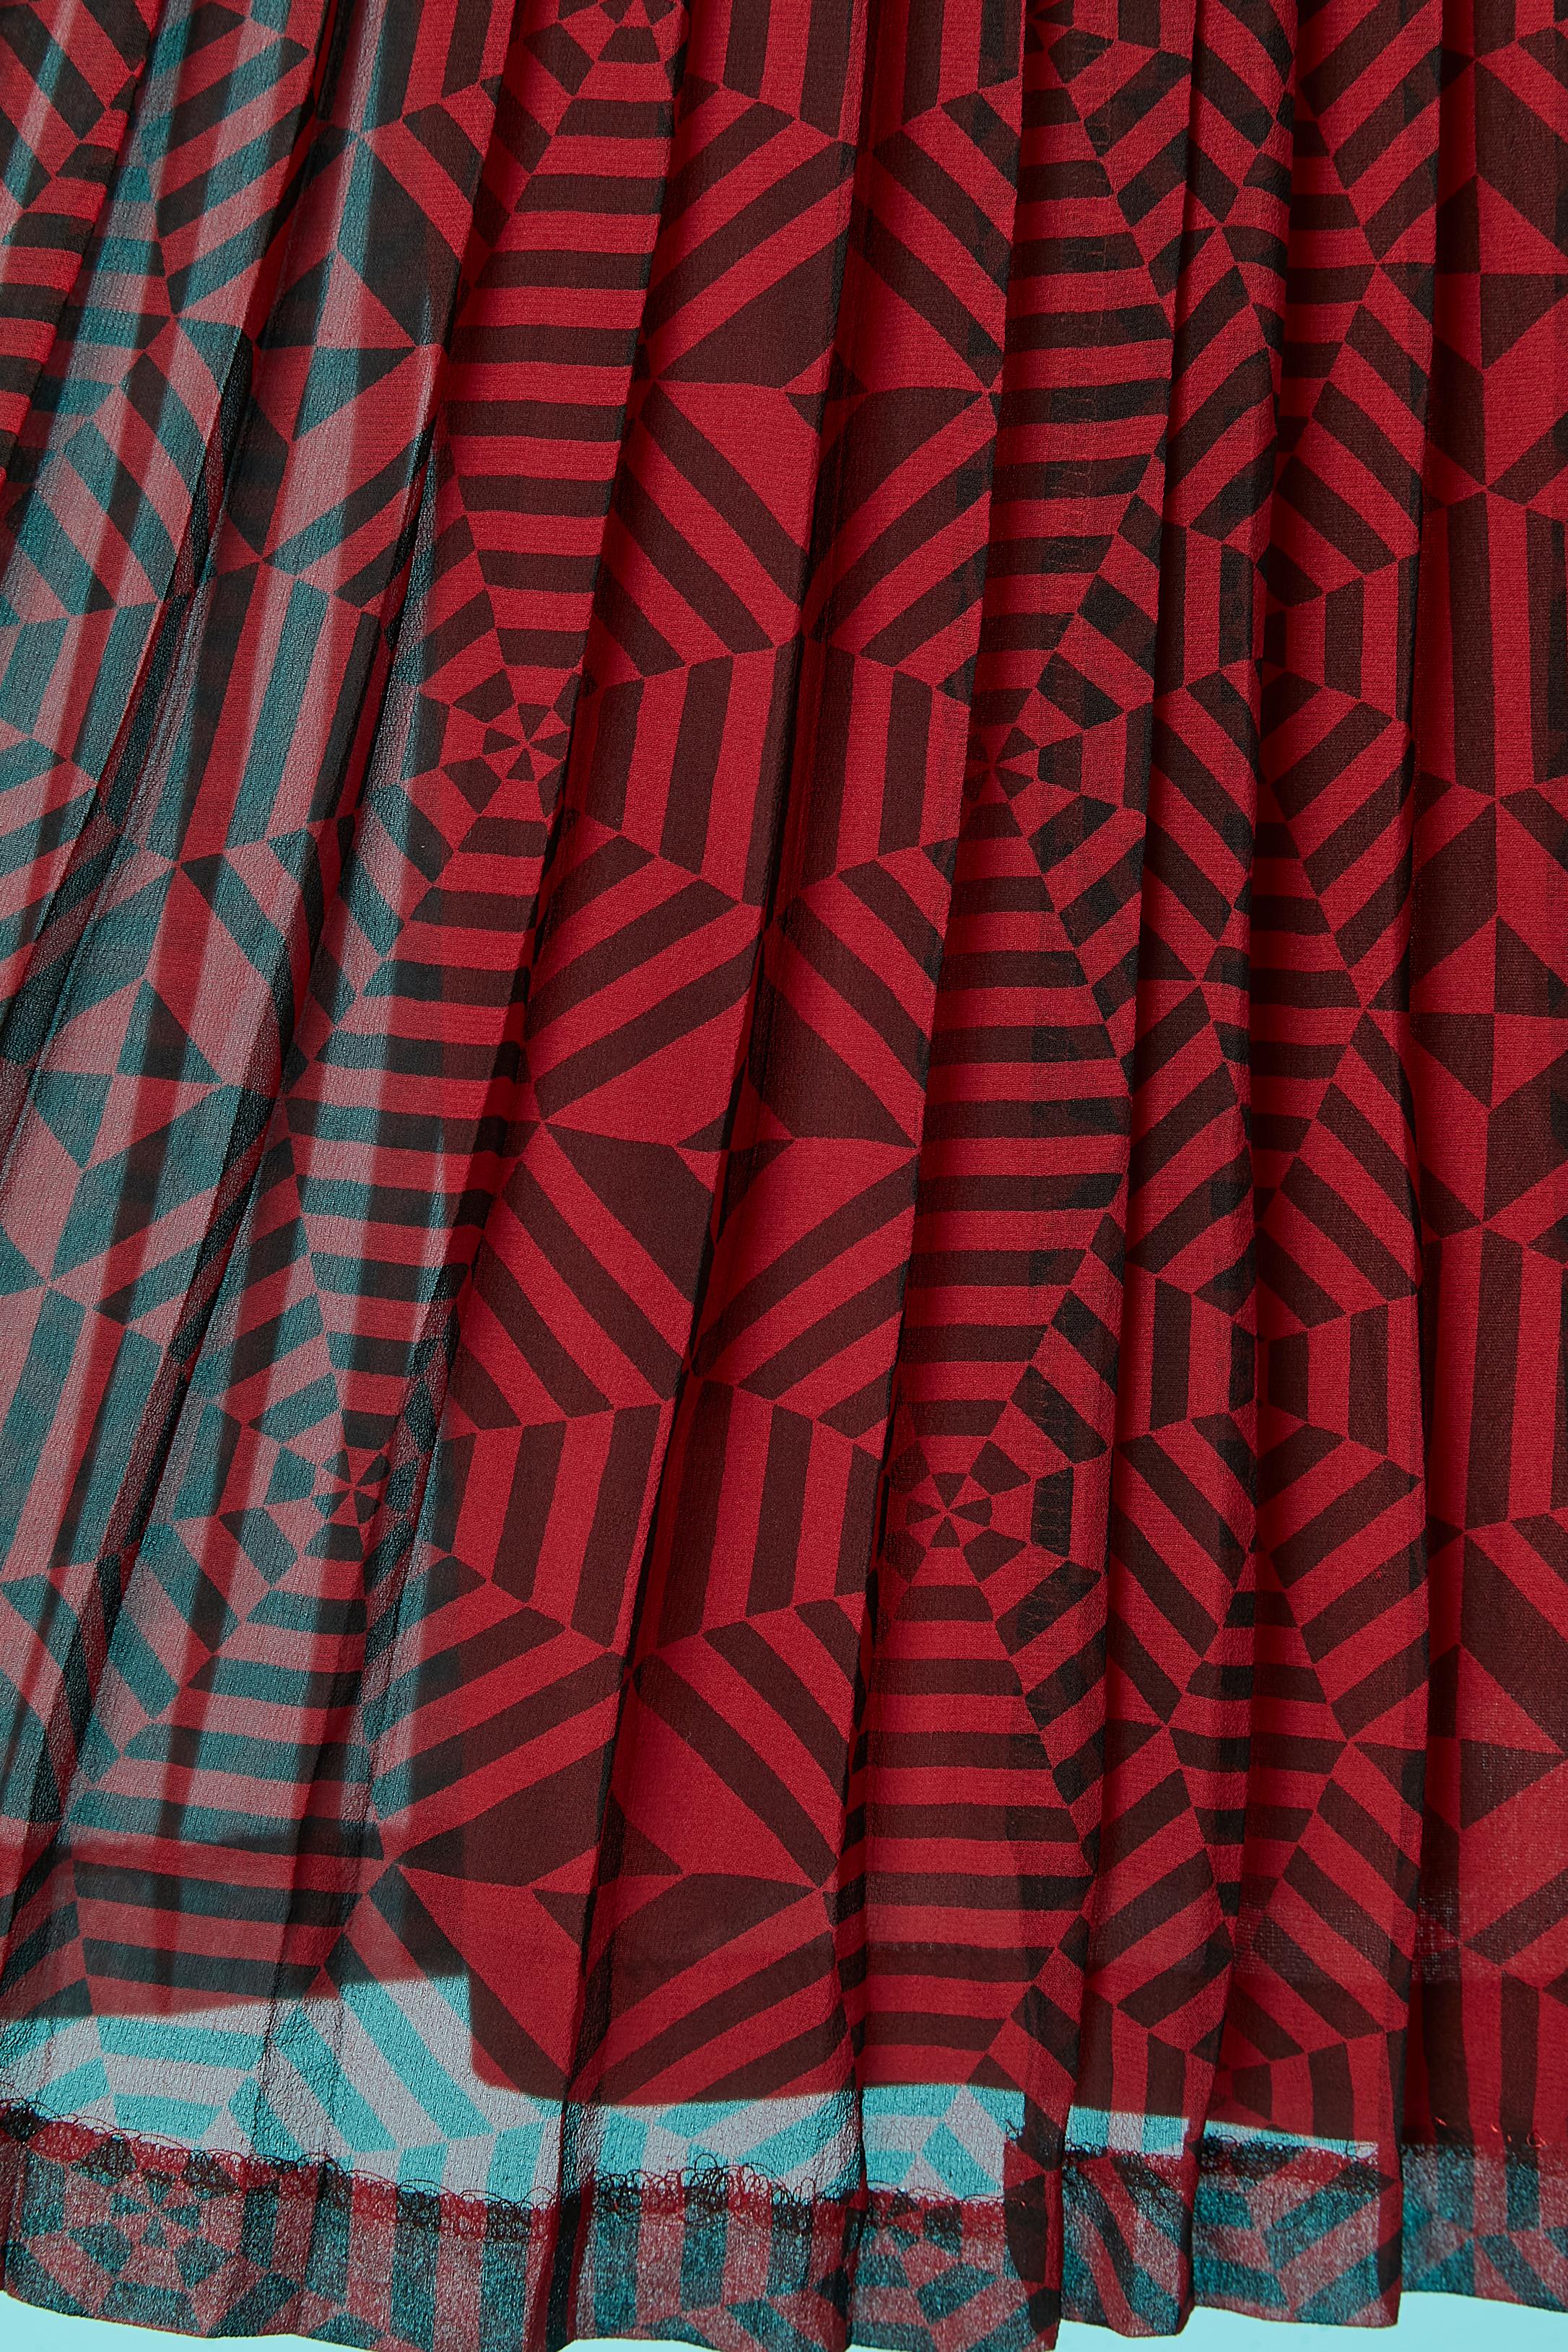 Brown Black and red graphic print on silk chiffon ensemble Guy Laroche Diffusion  For Sale